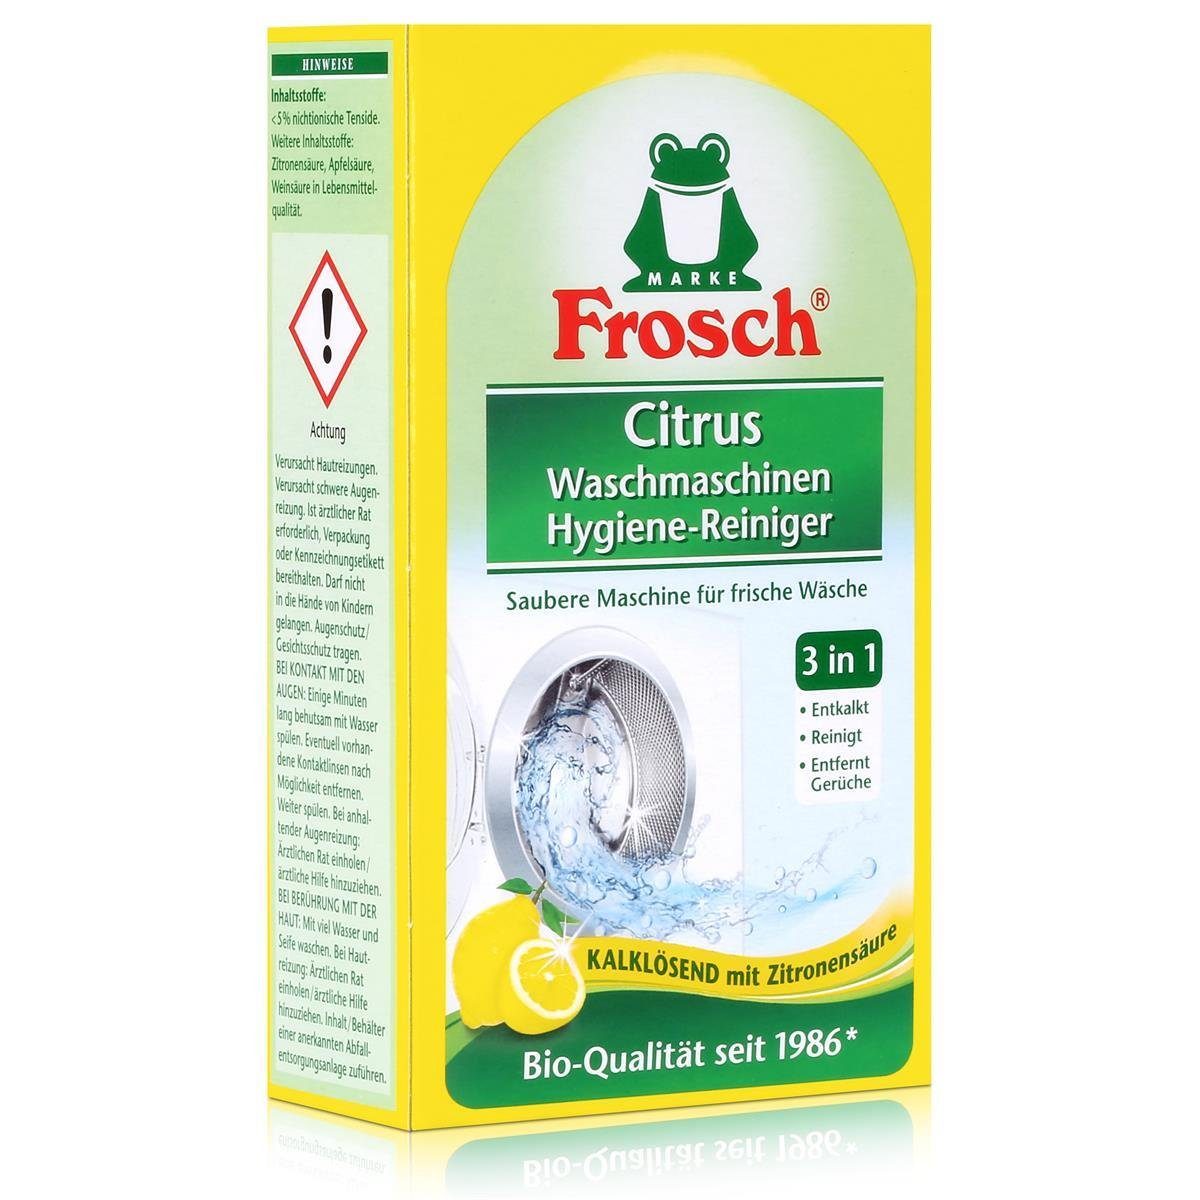 FROSCH Frosch Citrus Waschmaschinen Hygiene-Reiniger 250g P - Kalklösend Spezialwaschmittel (4er